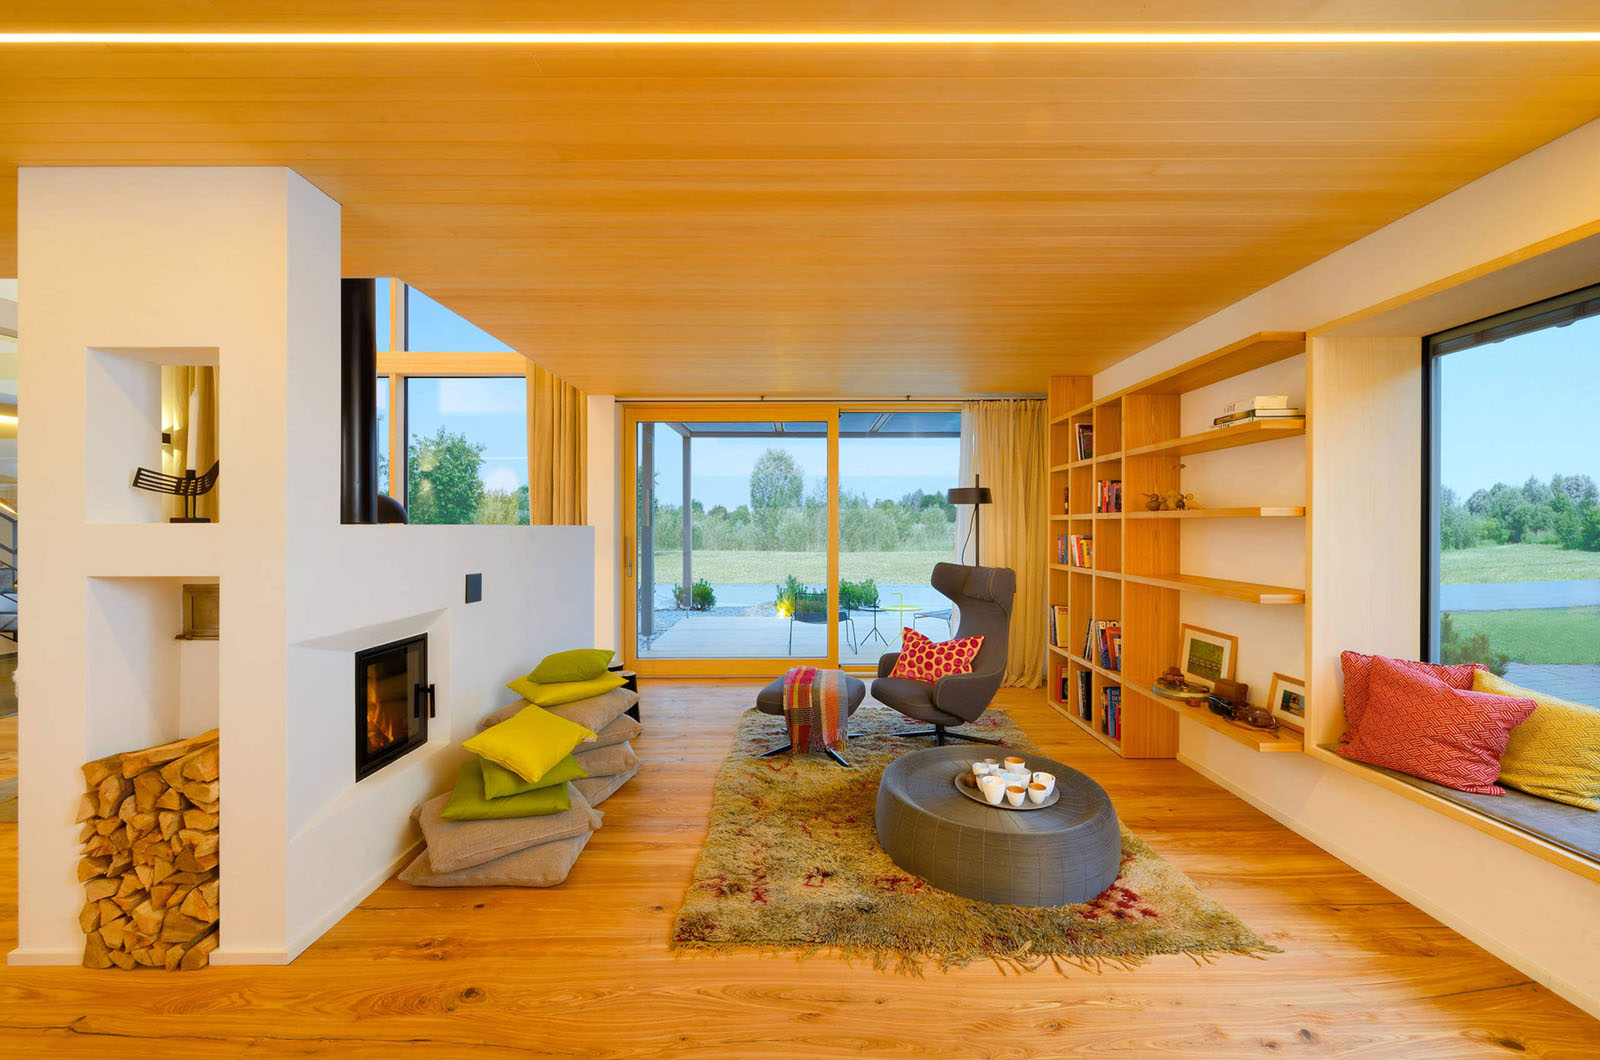 Modern Alpine Chic Home Interior Decor